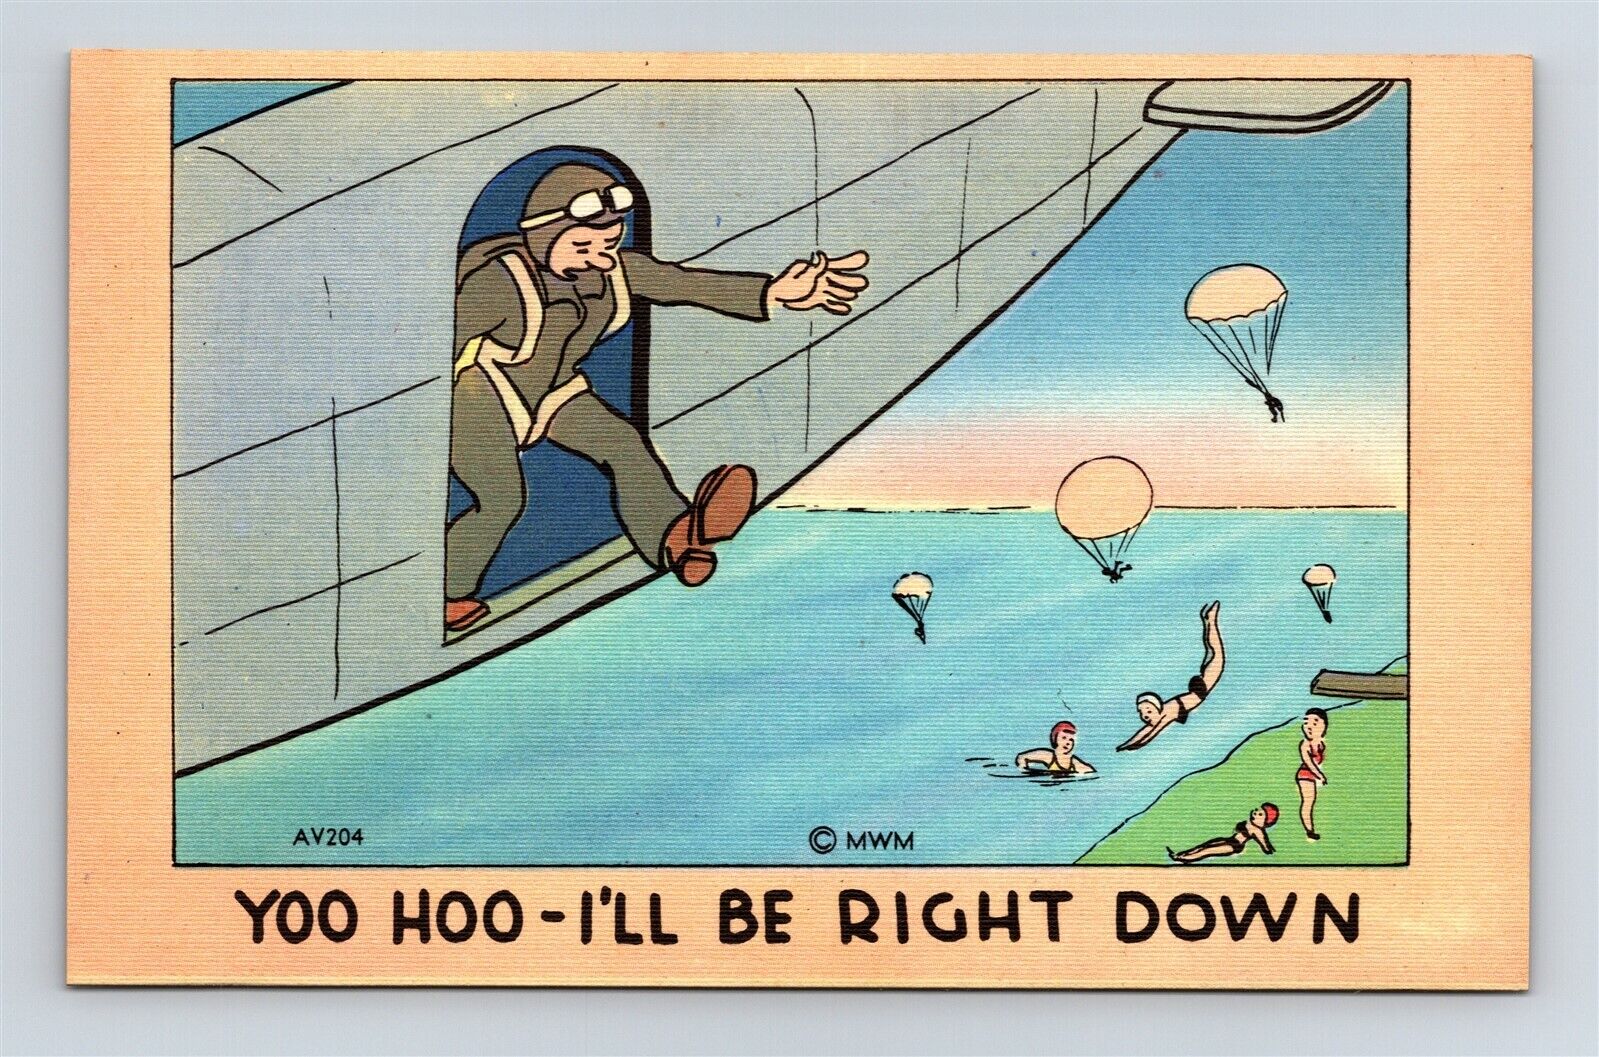 Postcard WW2 Era Military Humor Paratrooper Bikini Girls I'll Be Right Down AH1